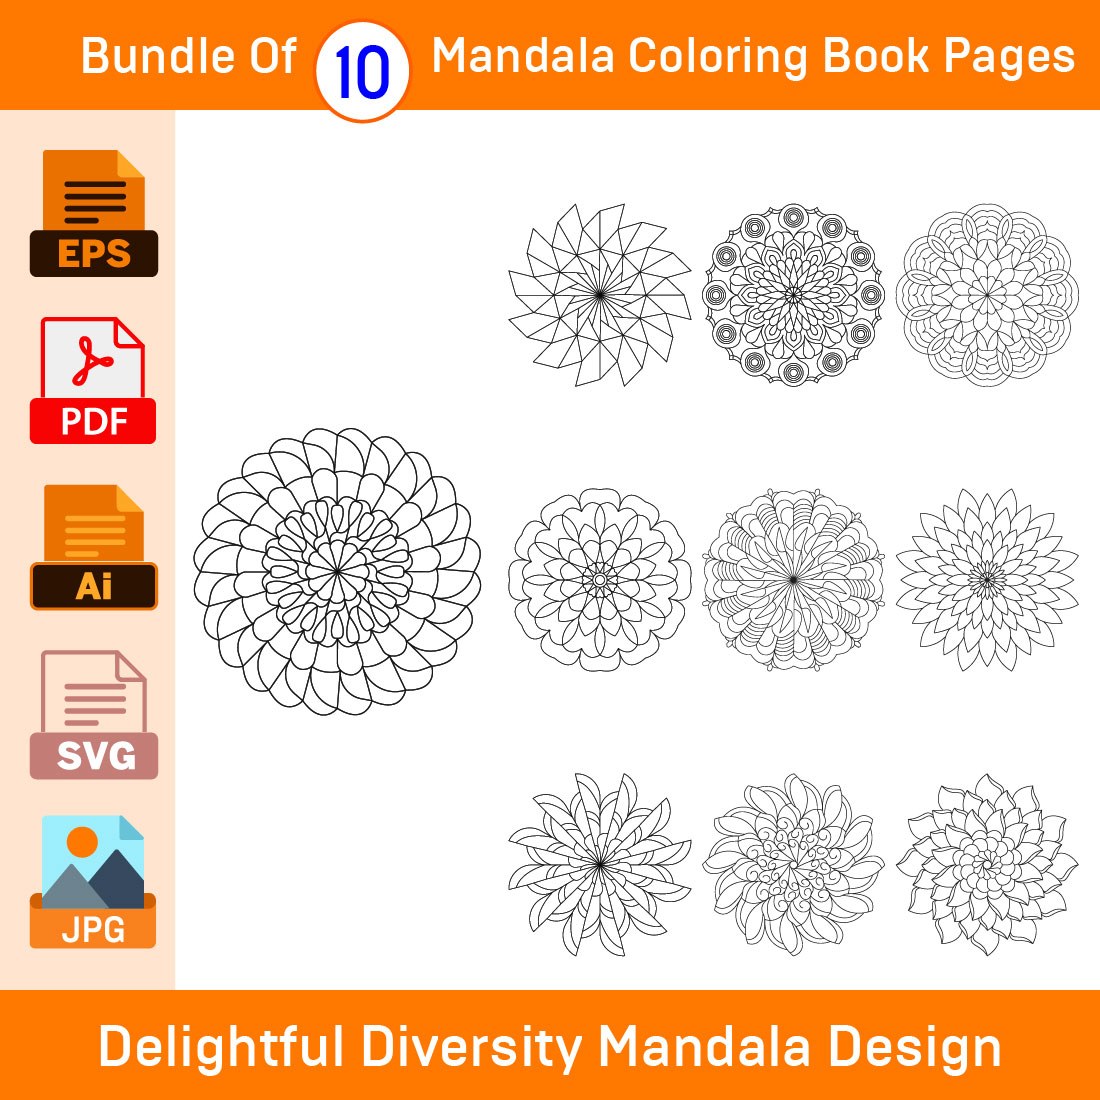 Bundle of delightful diversity mandala for kdp coloring book interior pages